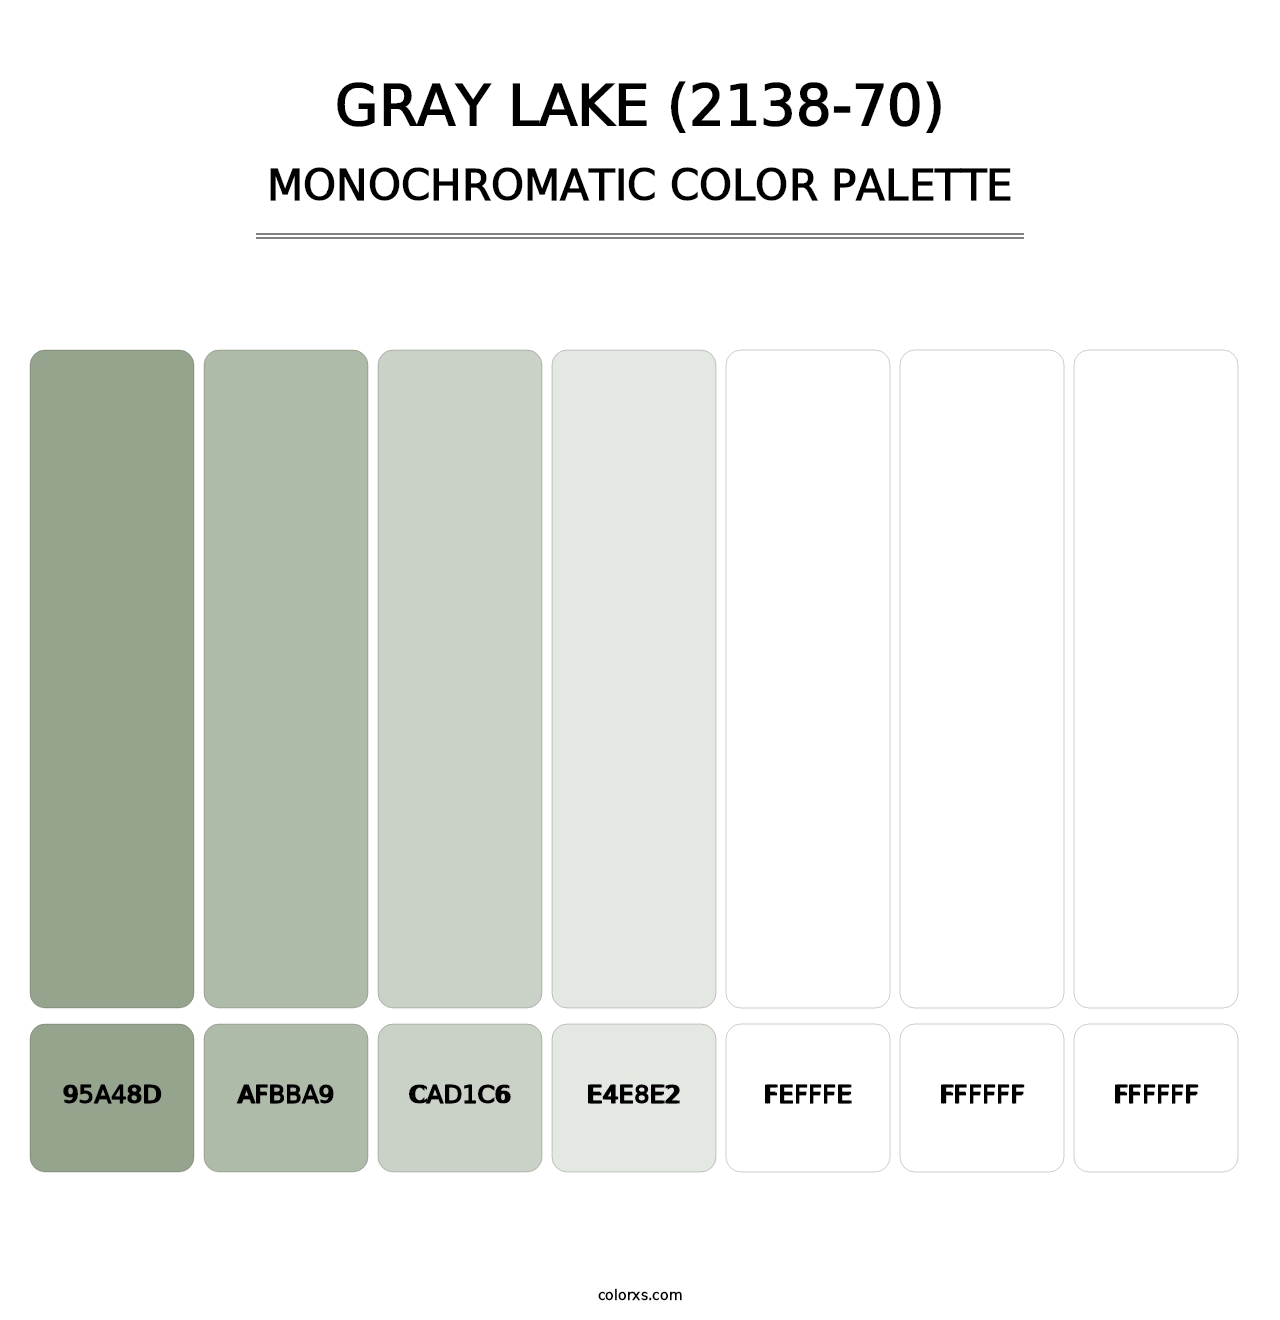 Gray Lake (2138-70) - Monochromatic Color Palette